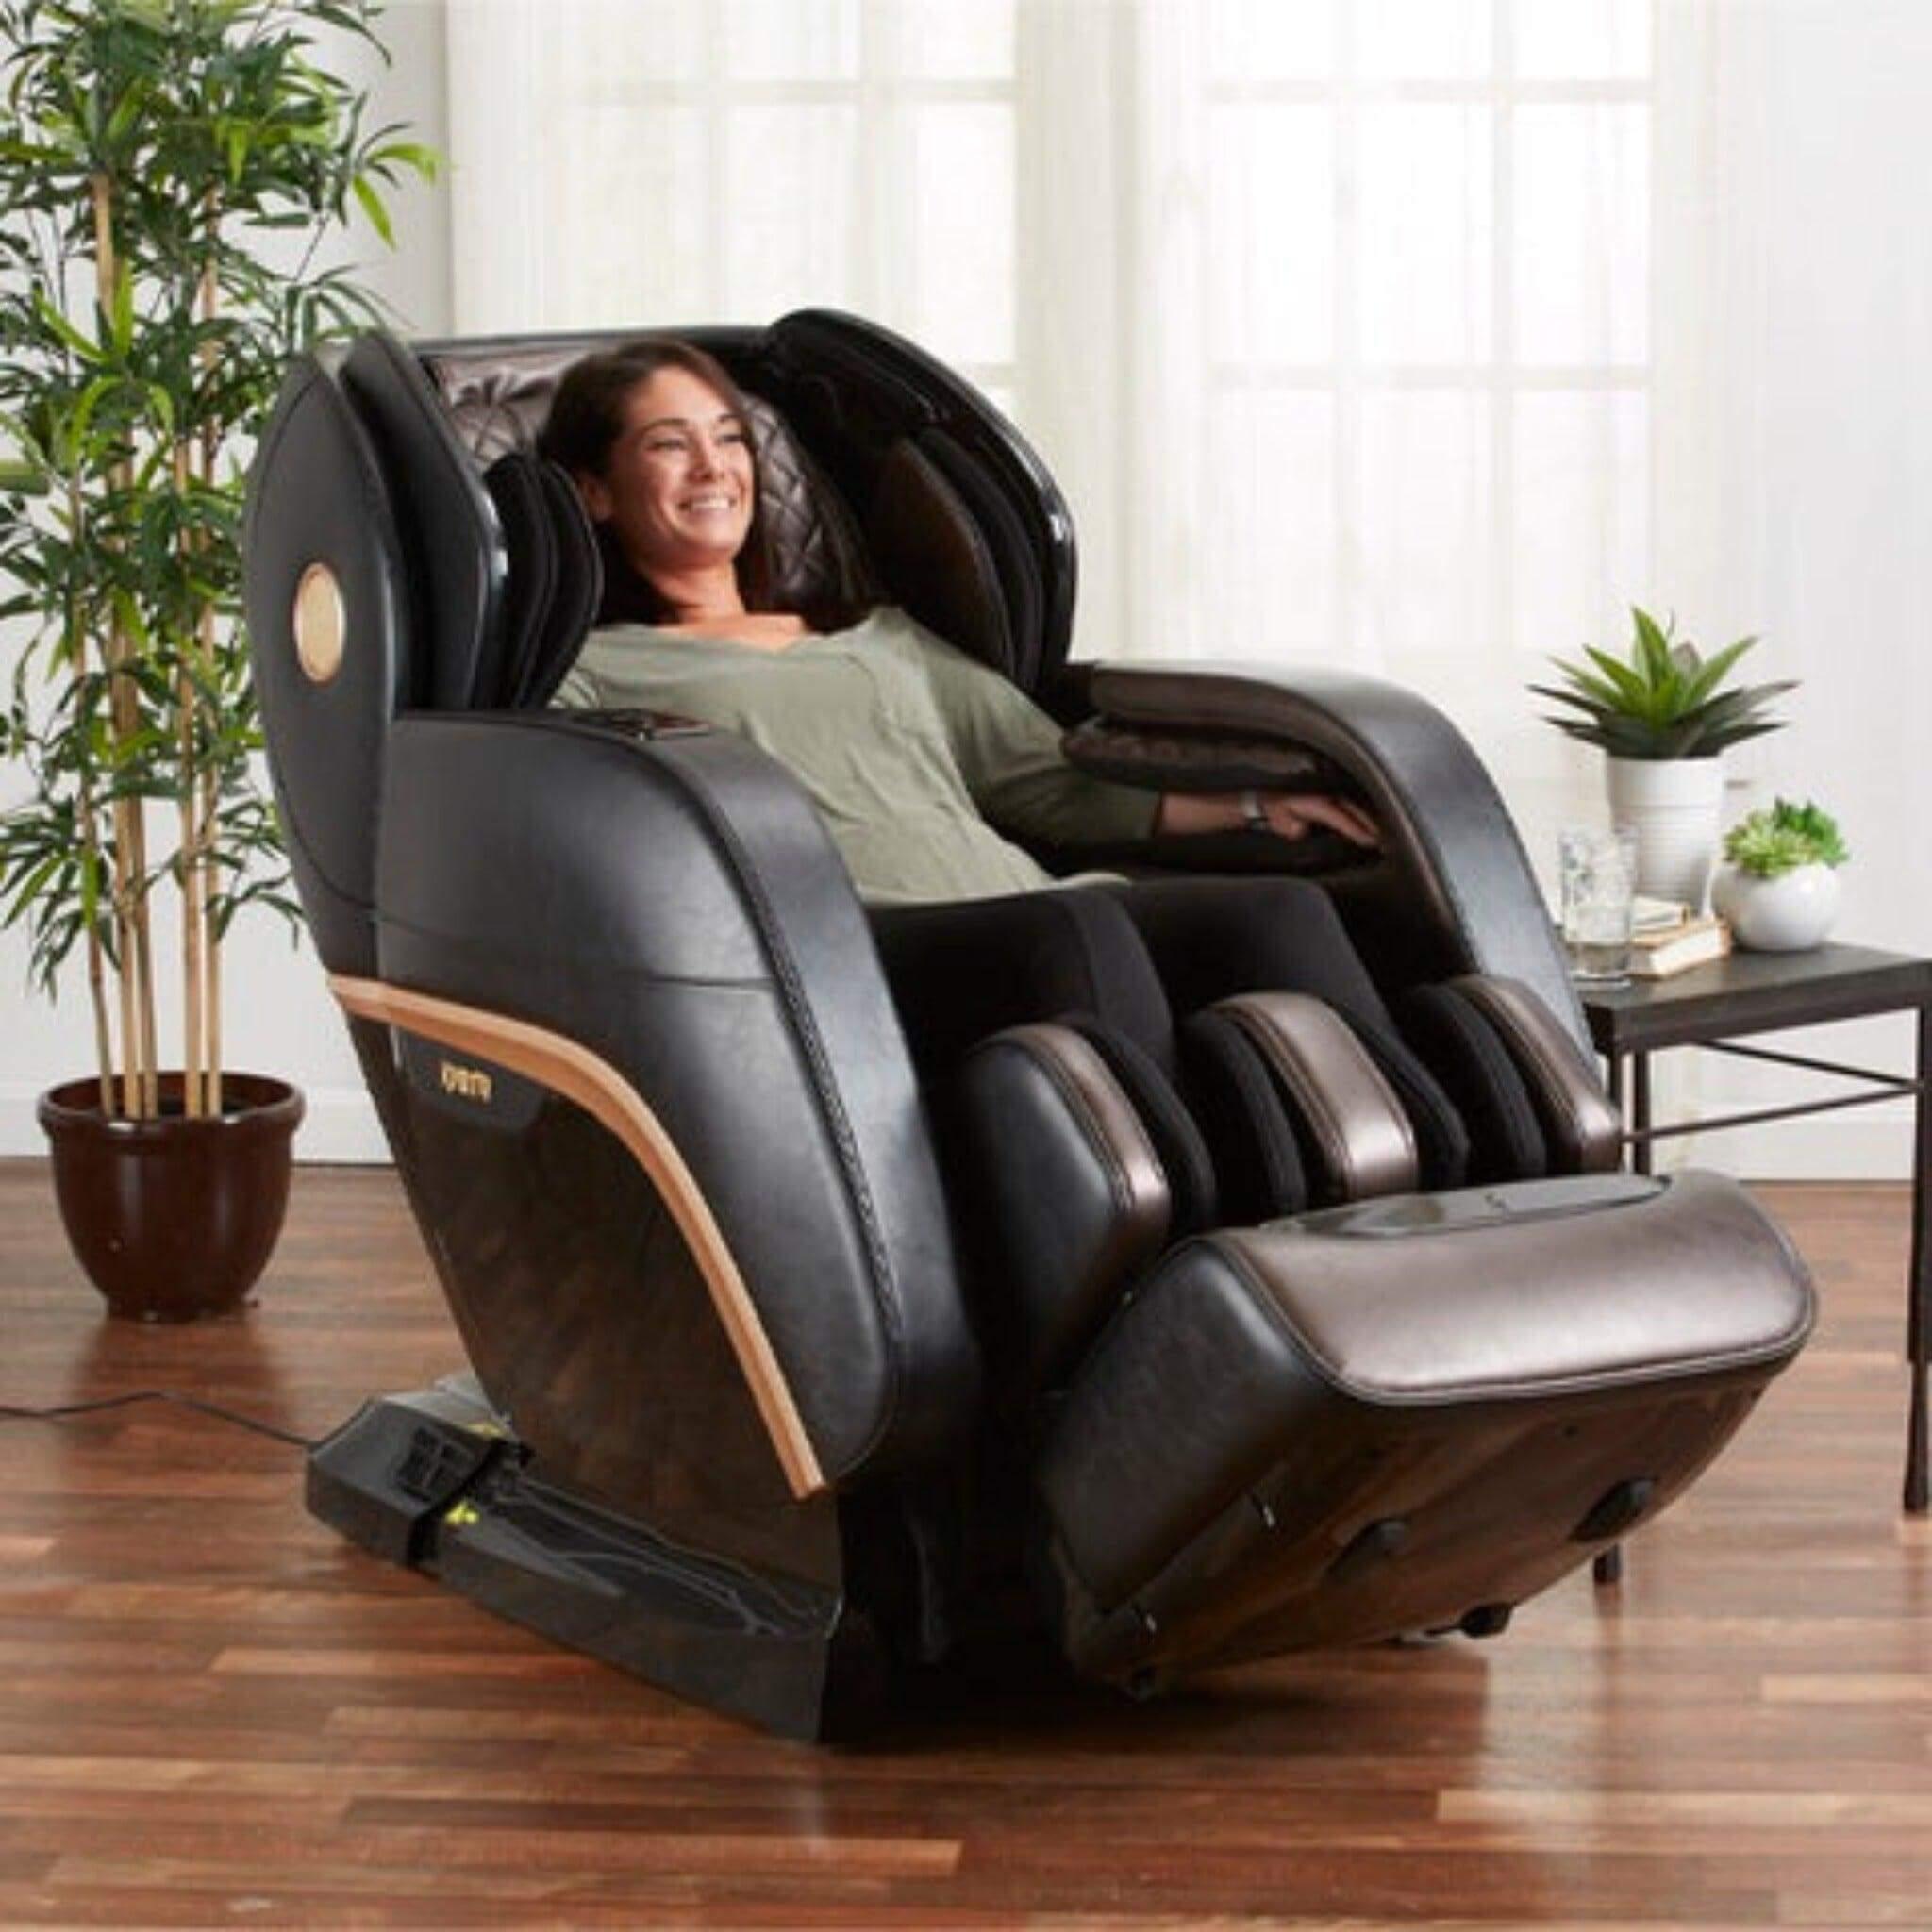 Kyota Kokoro M888 4D Massage Chair | Superior Quality & Technology - 18700214 - Health & Beauty > Massage & Relaxation > Massage Chairs at zebramassagechairs.com